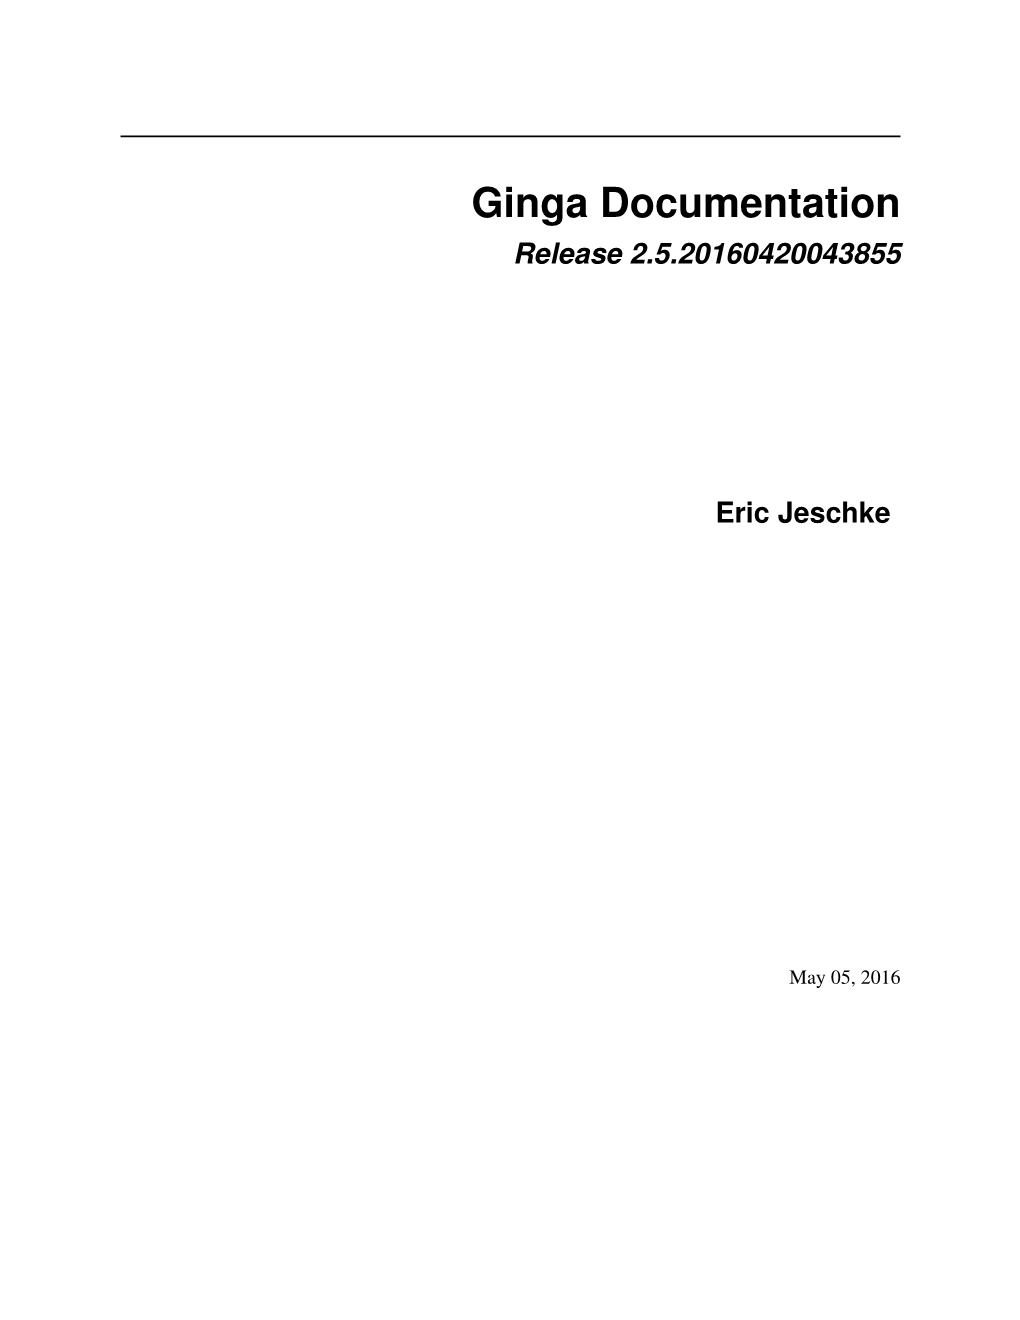 Ginga Documentation Release 2.5.20160420043855